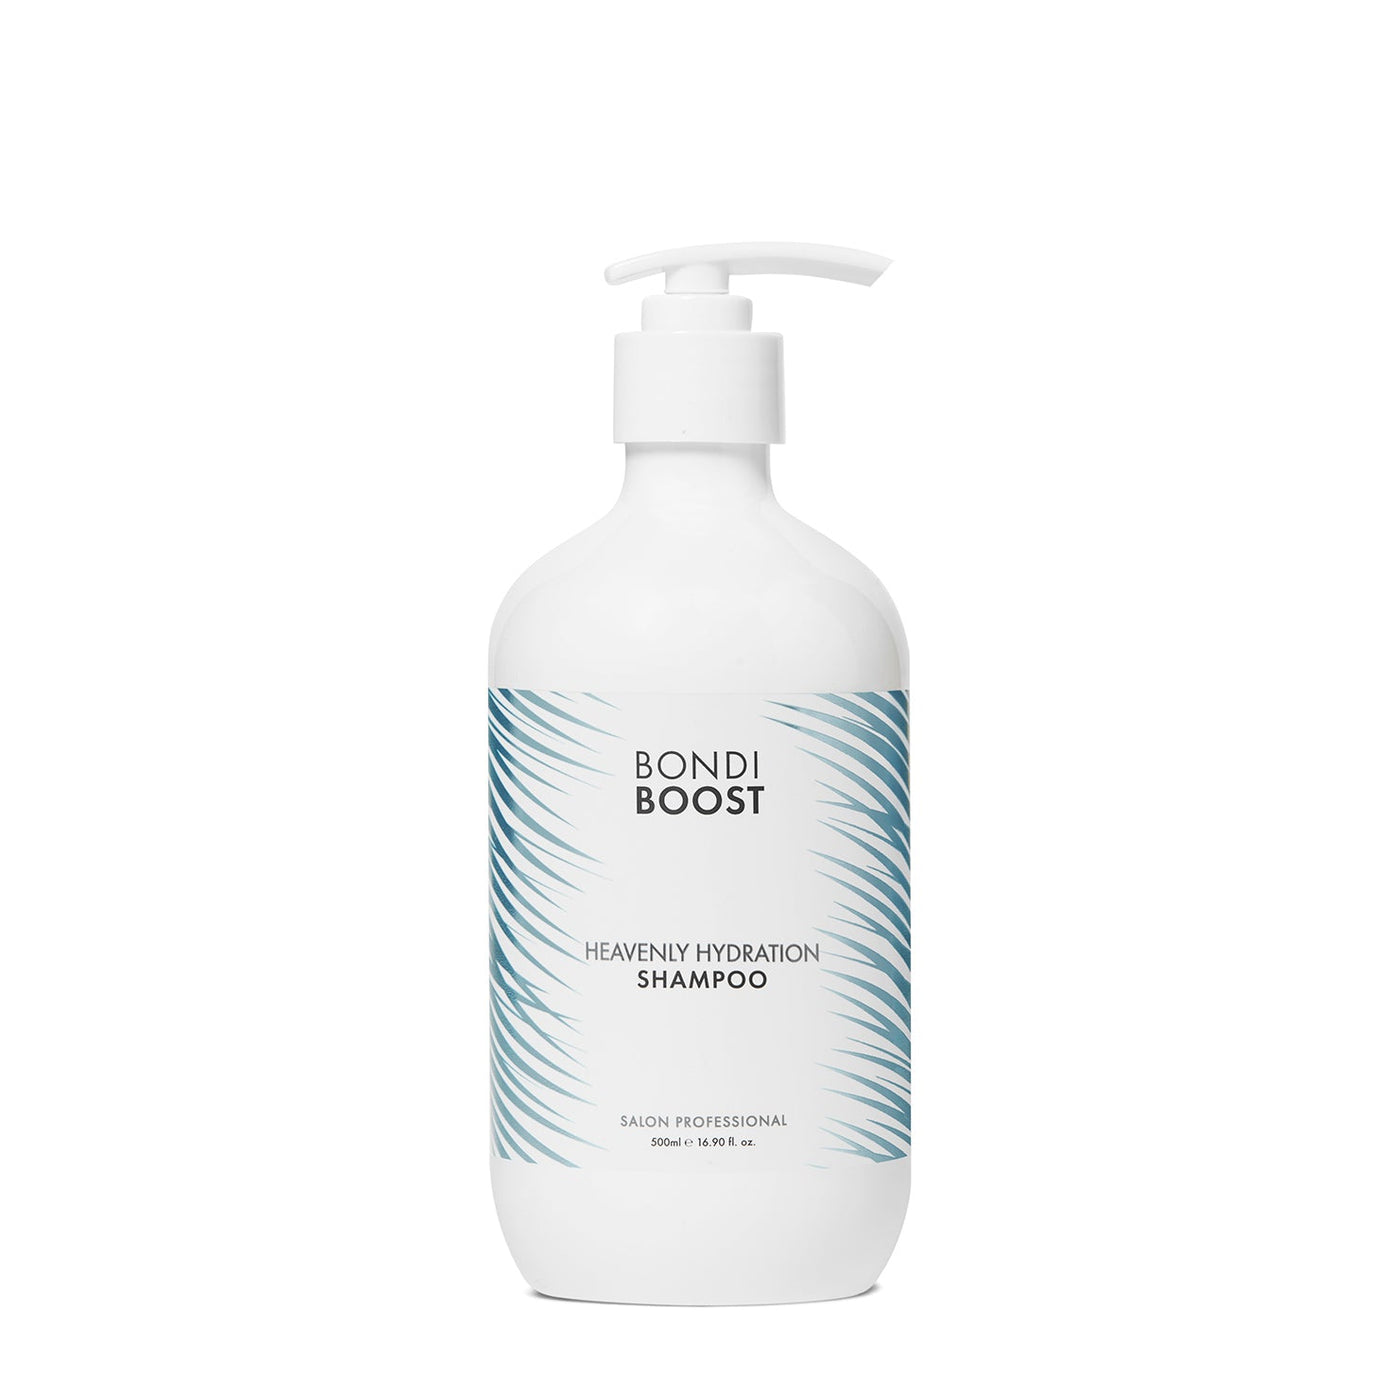 BondiBoost Heavenly Hydration Shampoo - 500ml